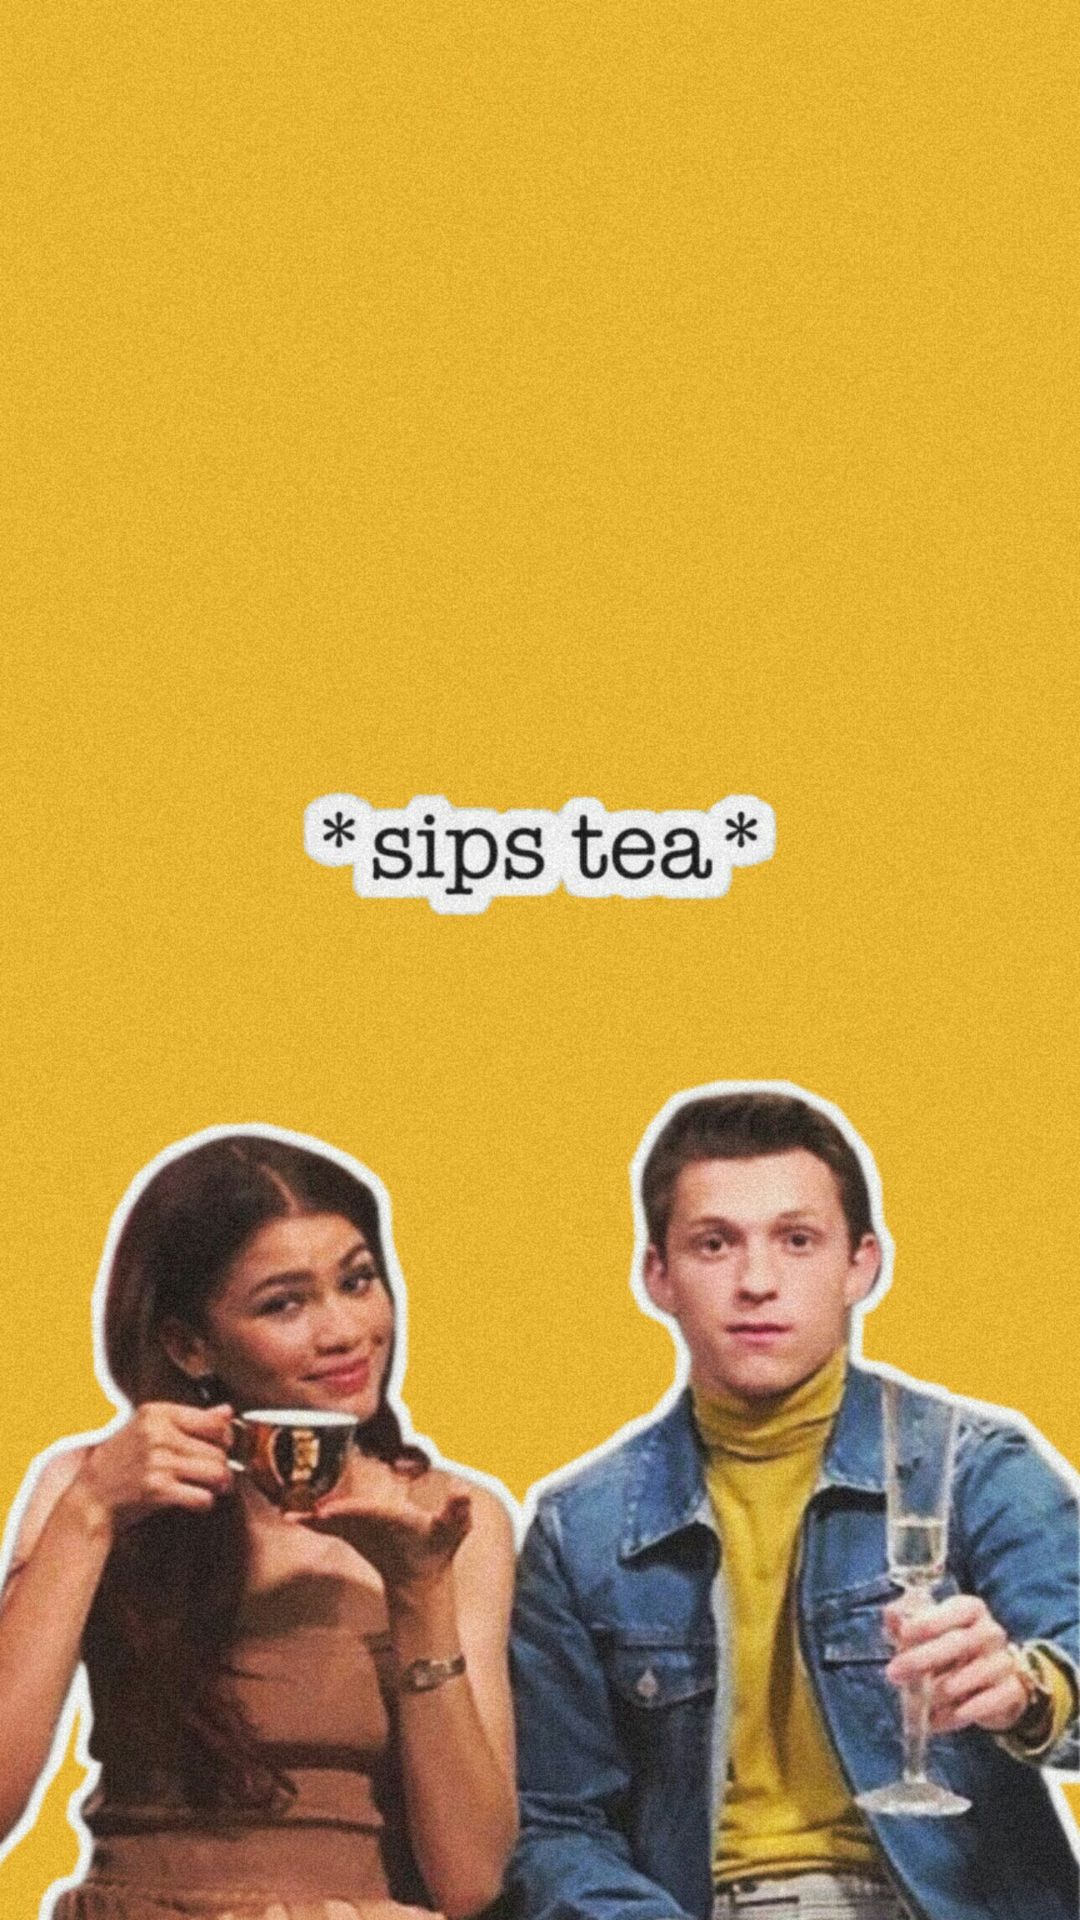 Sips tea aesthetic wallpaper for phone with Zendaya and Tom Holland - Zendaya, Tom Holland